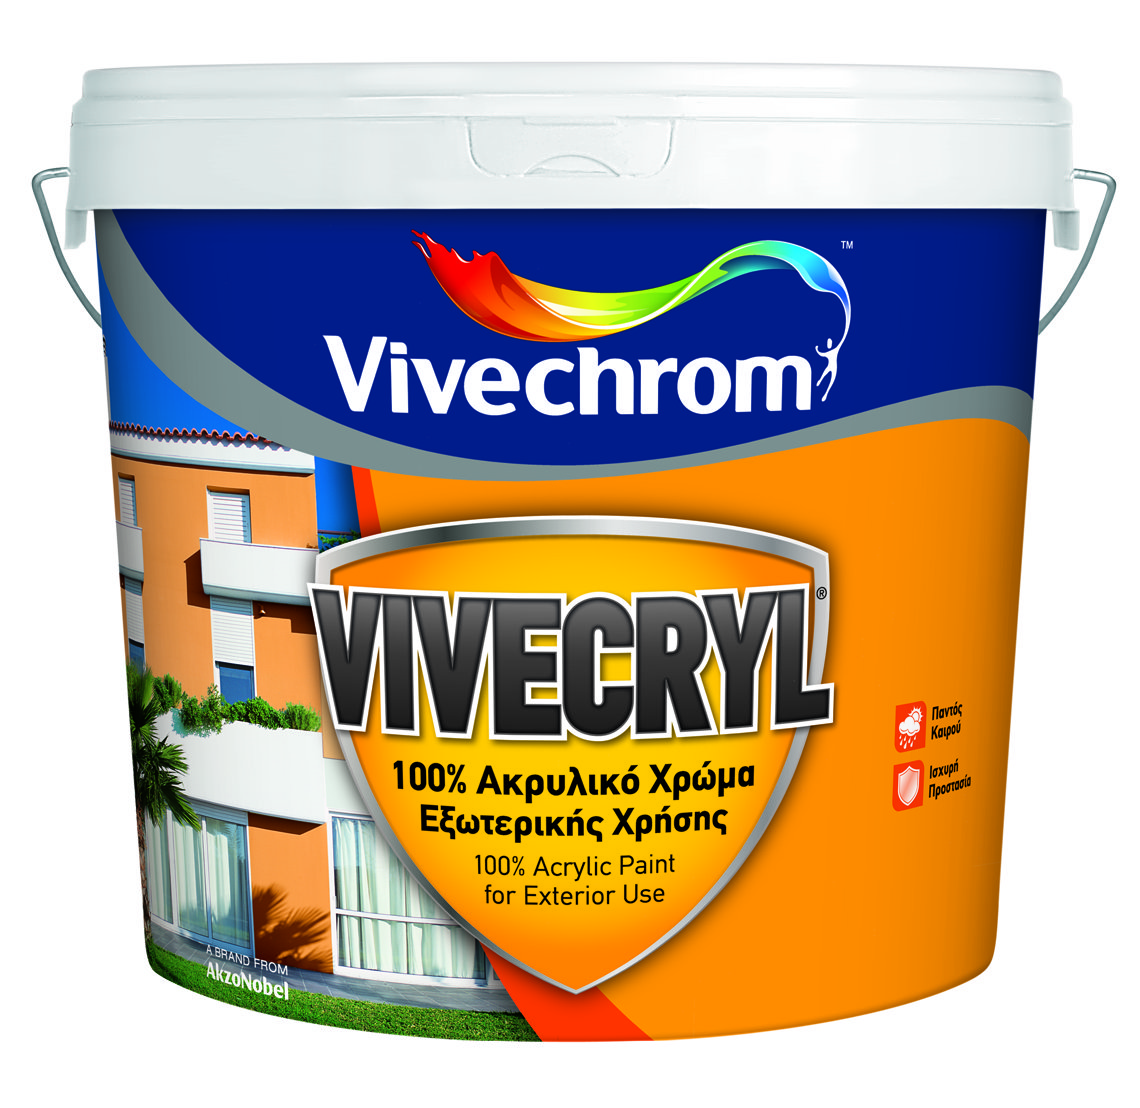 Vivechrom Vivecryl Ακρυλικό Οικολογικό Χρώμα Matt Finish Βάση TR 3L